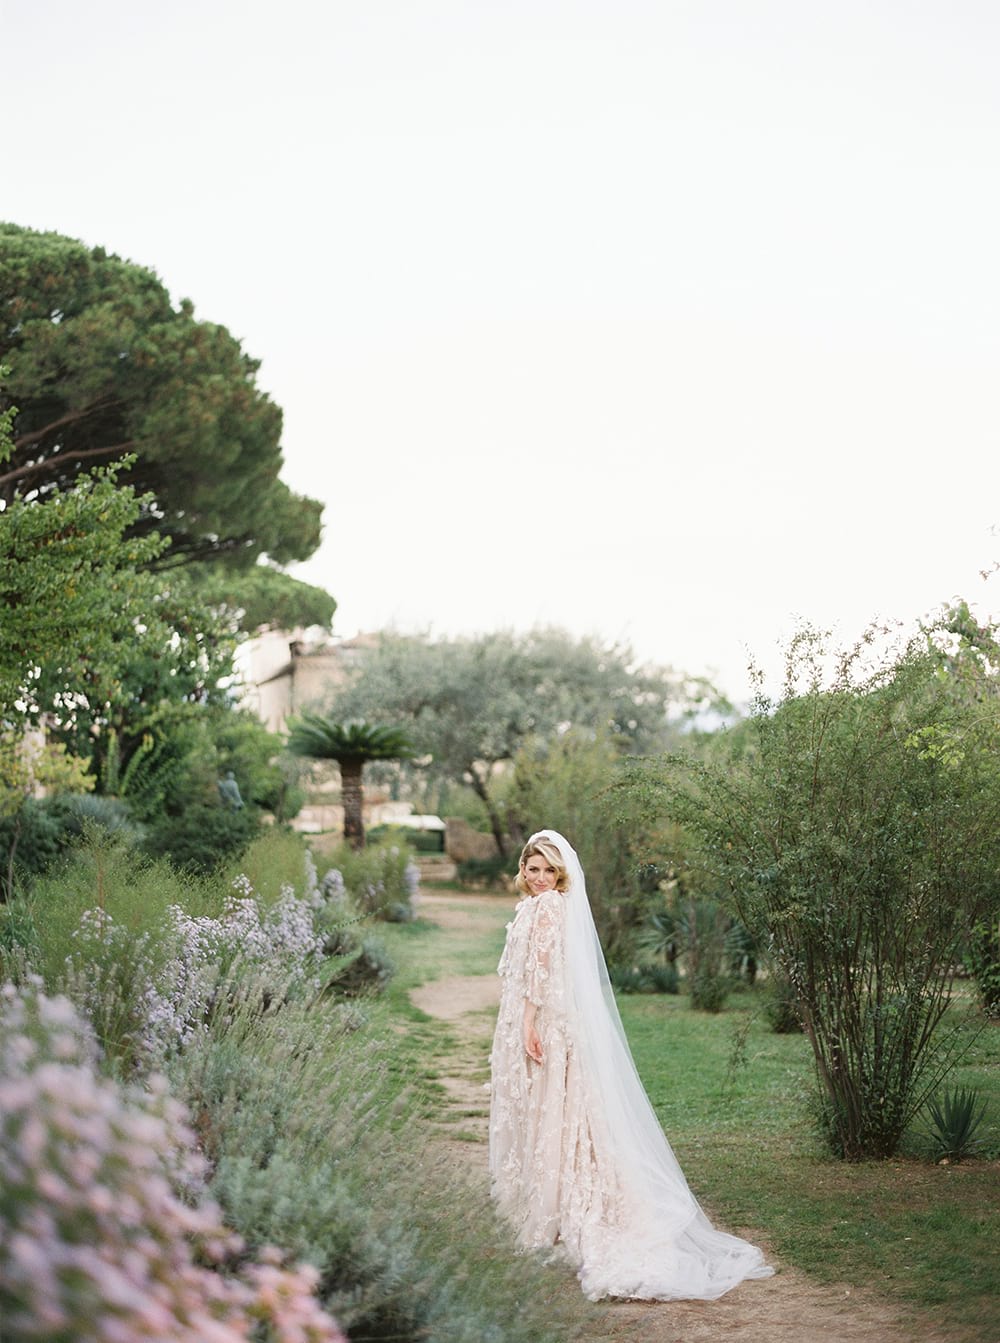 wedding villa cimbrone ravello, italy bridal portrait in the gardens marchesa bridal 